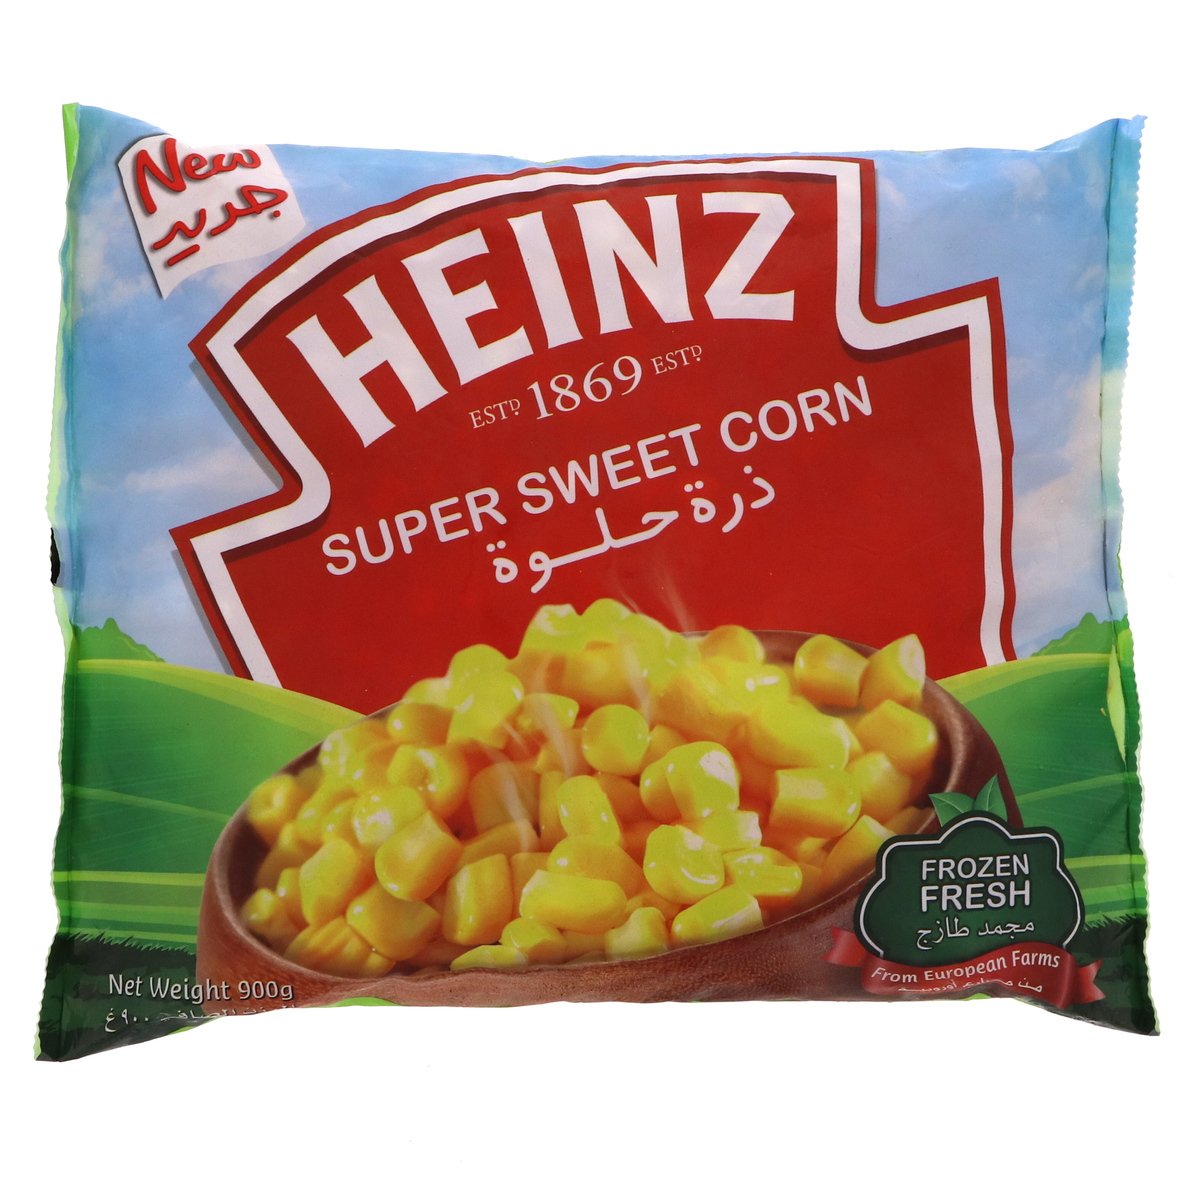 Heinz Super Sweet Corn 900g